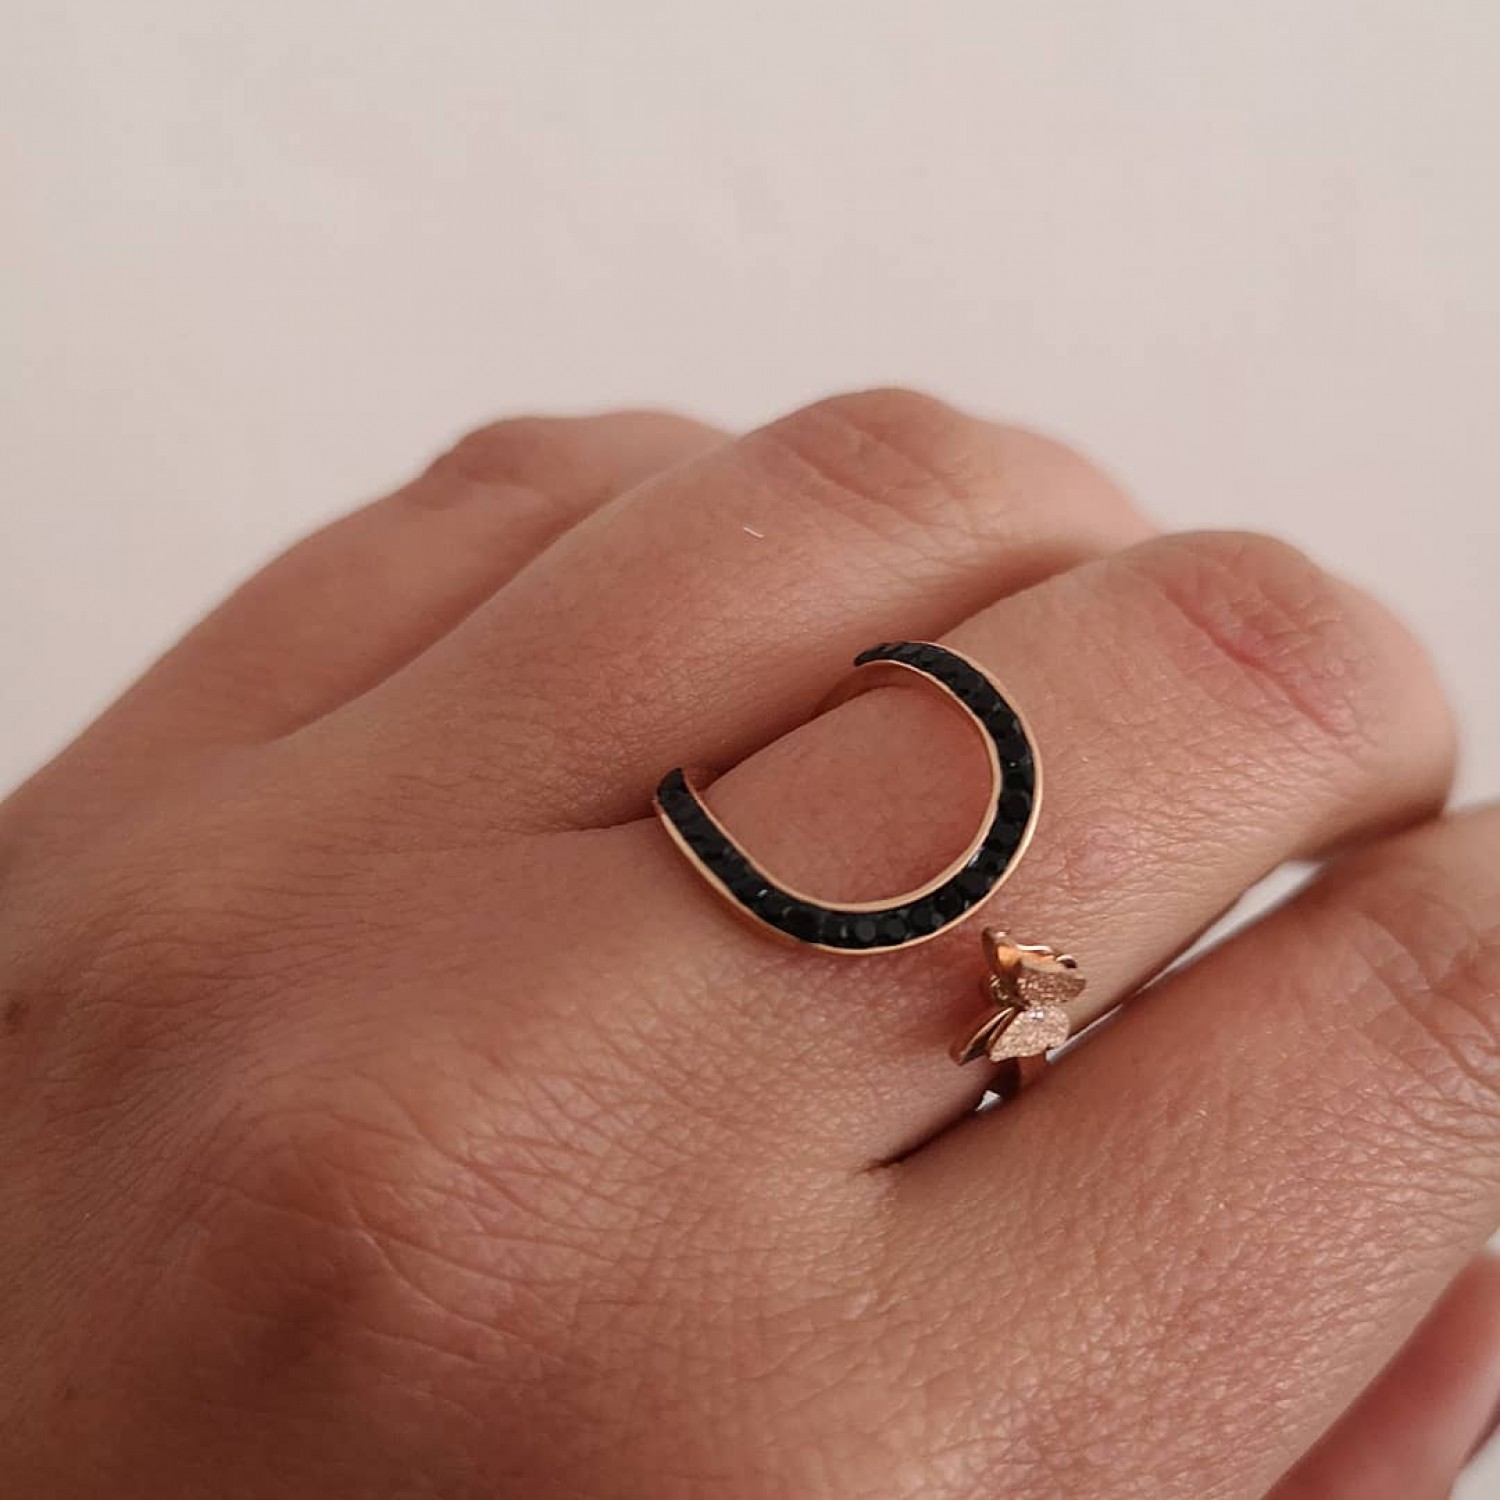 STAINLESS STEEL δαχτυλίδι ανοιγόμενο πεταλούδα μαύρο στρας ροζ χρυσό.